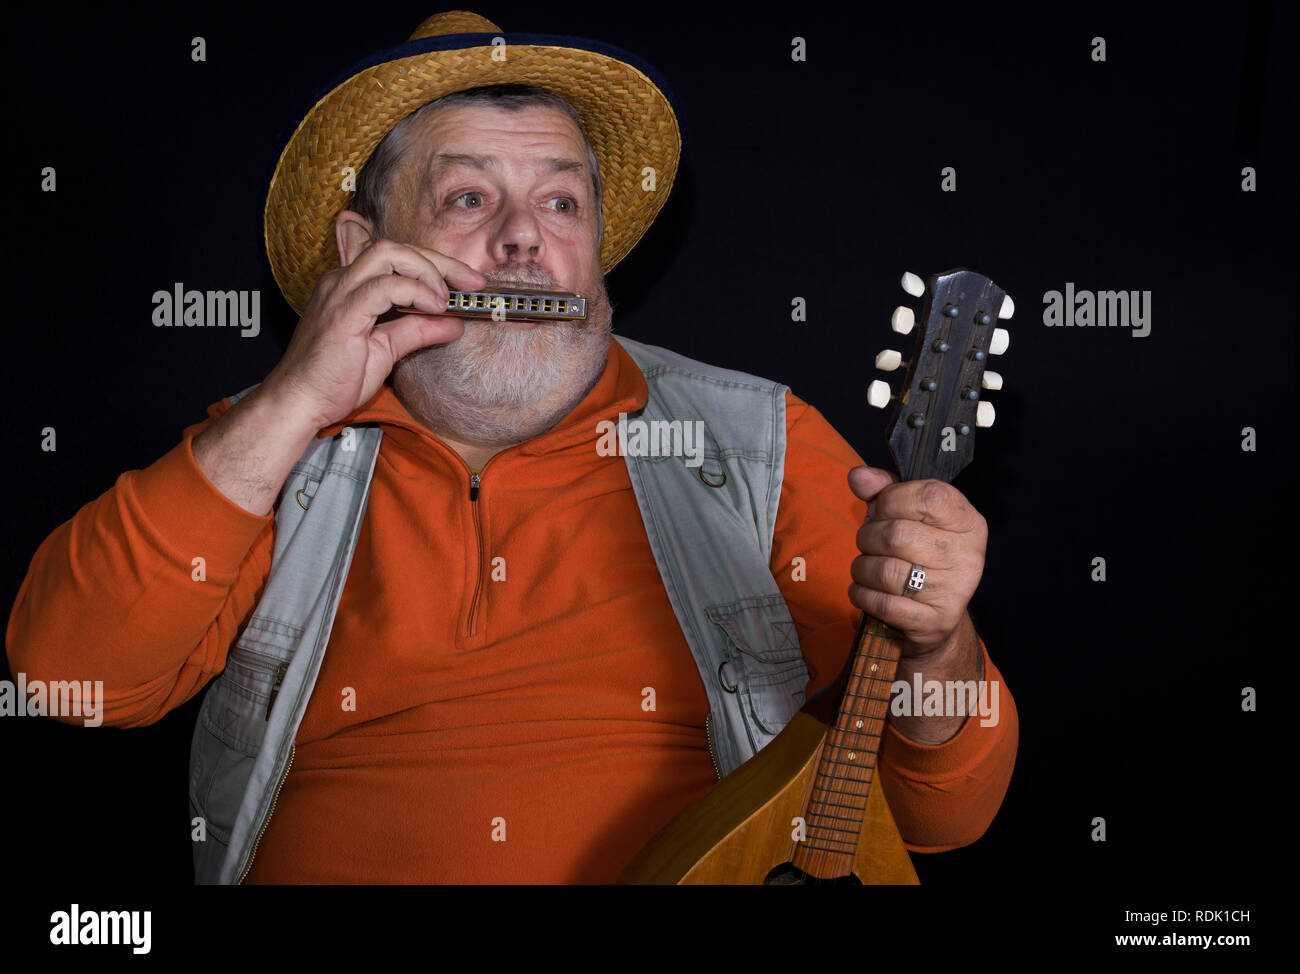 Senior musician playing mouth-organ while holding mandolin Stock Photo